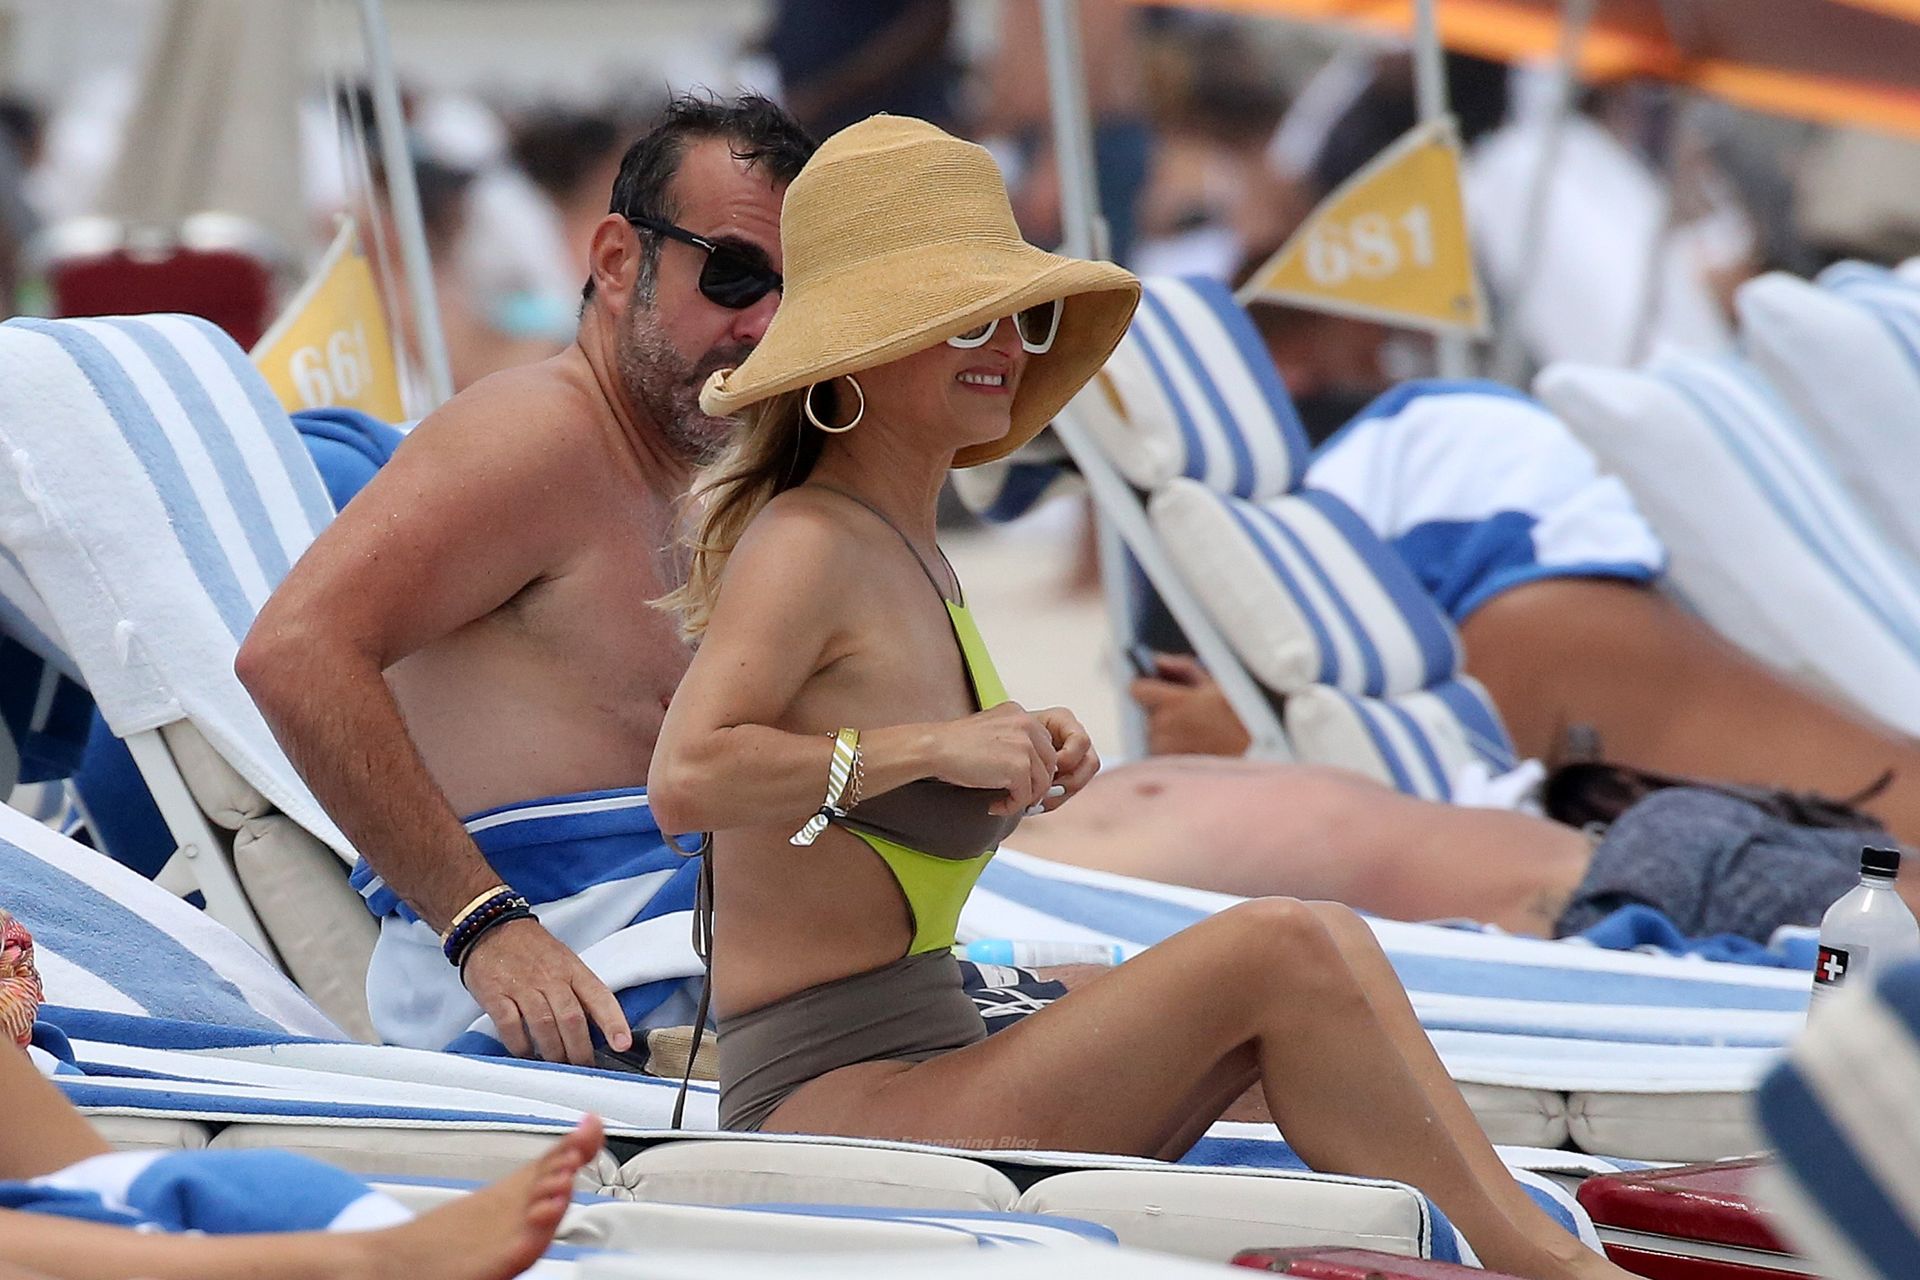 Giada De Laurentiis Relaxes with Shane Farley on the Beach in Miami (28 Photos)